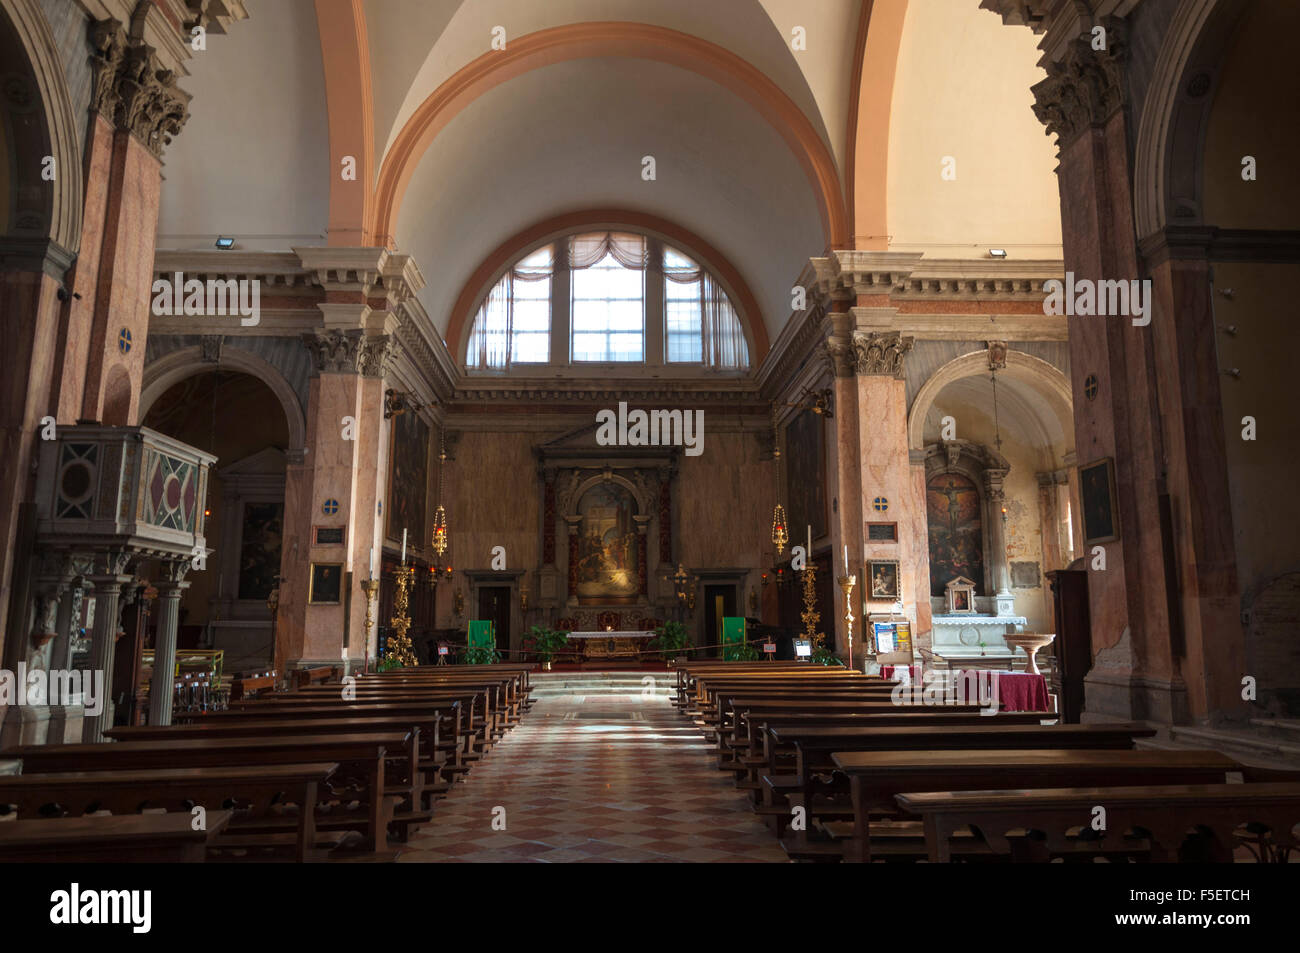 Chiesa dei SS. Gervasio e Protasio, Venice, Italy. vulgo San Trovaso. Interior altar art pews Stock Photo